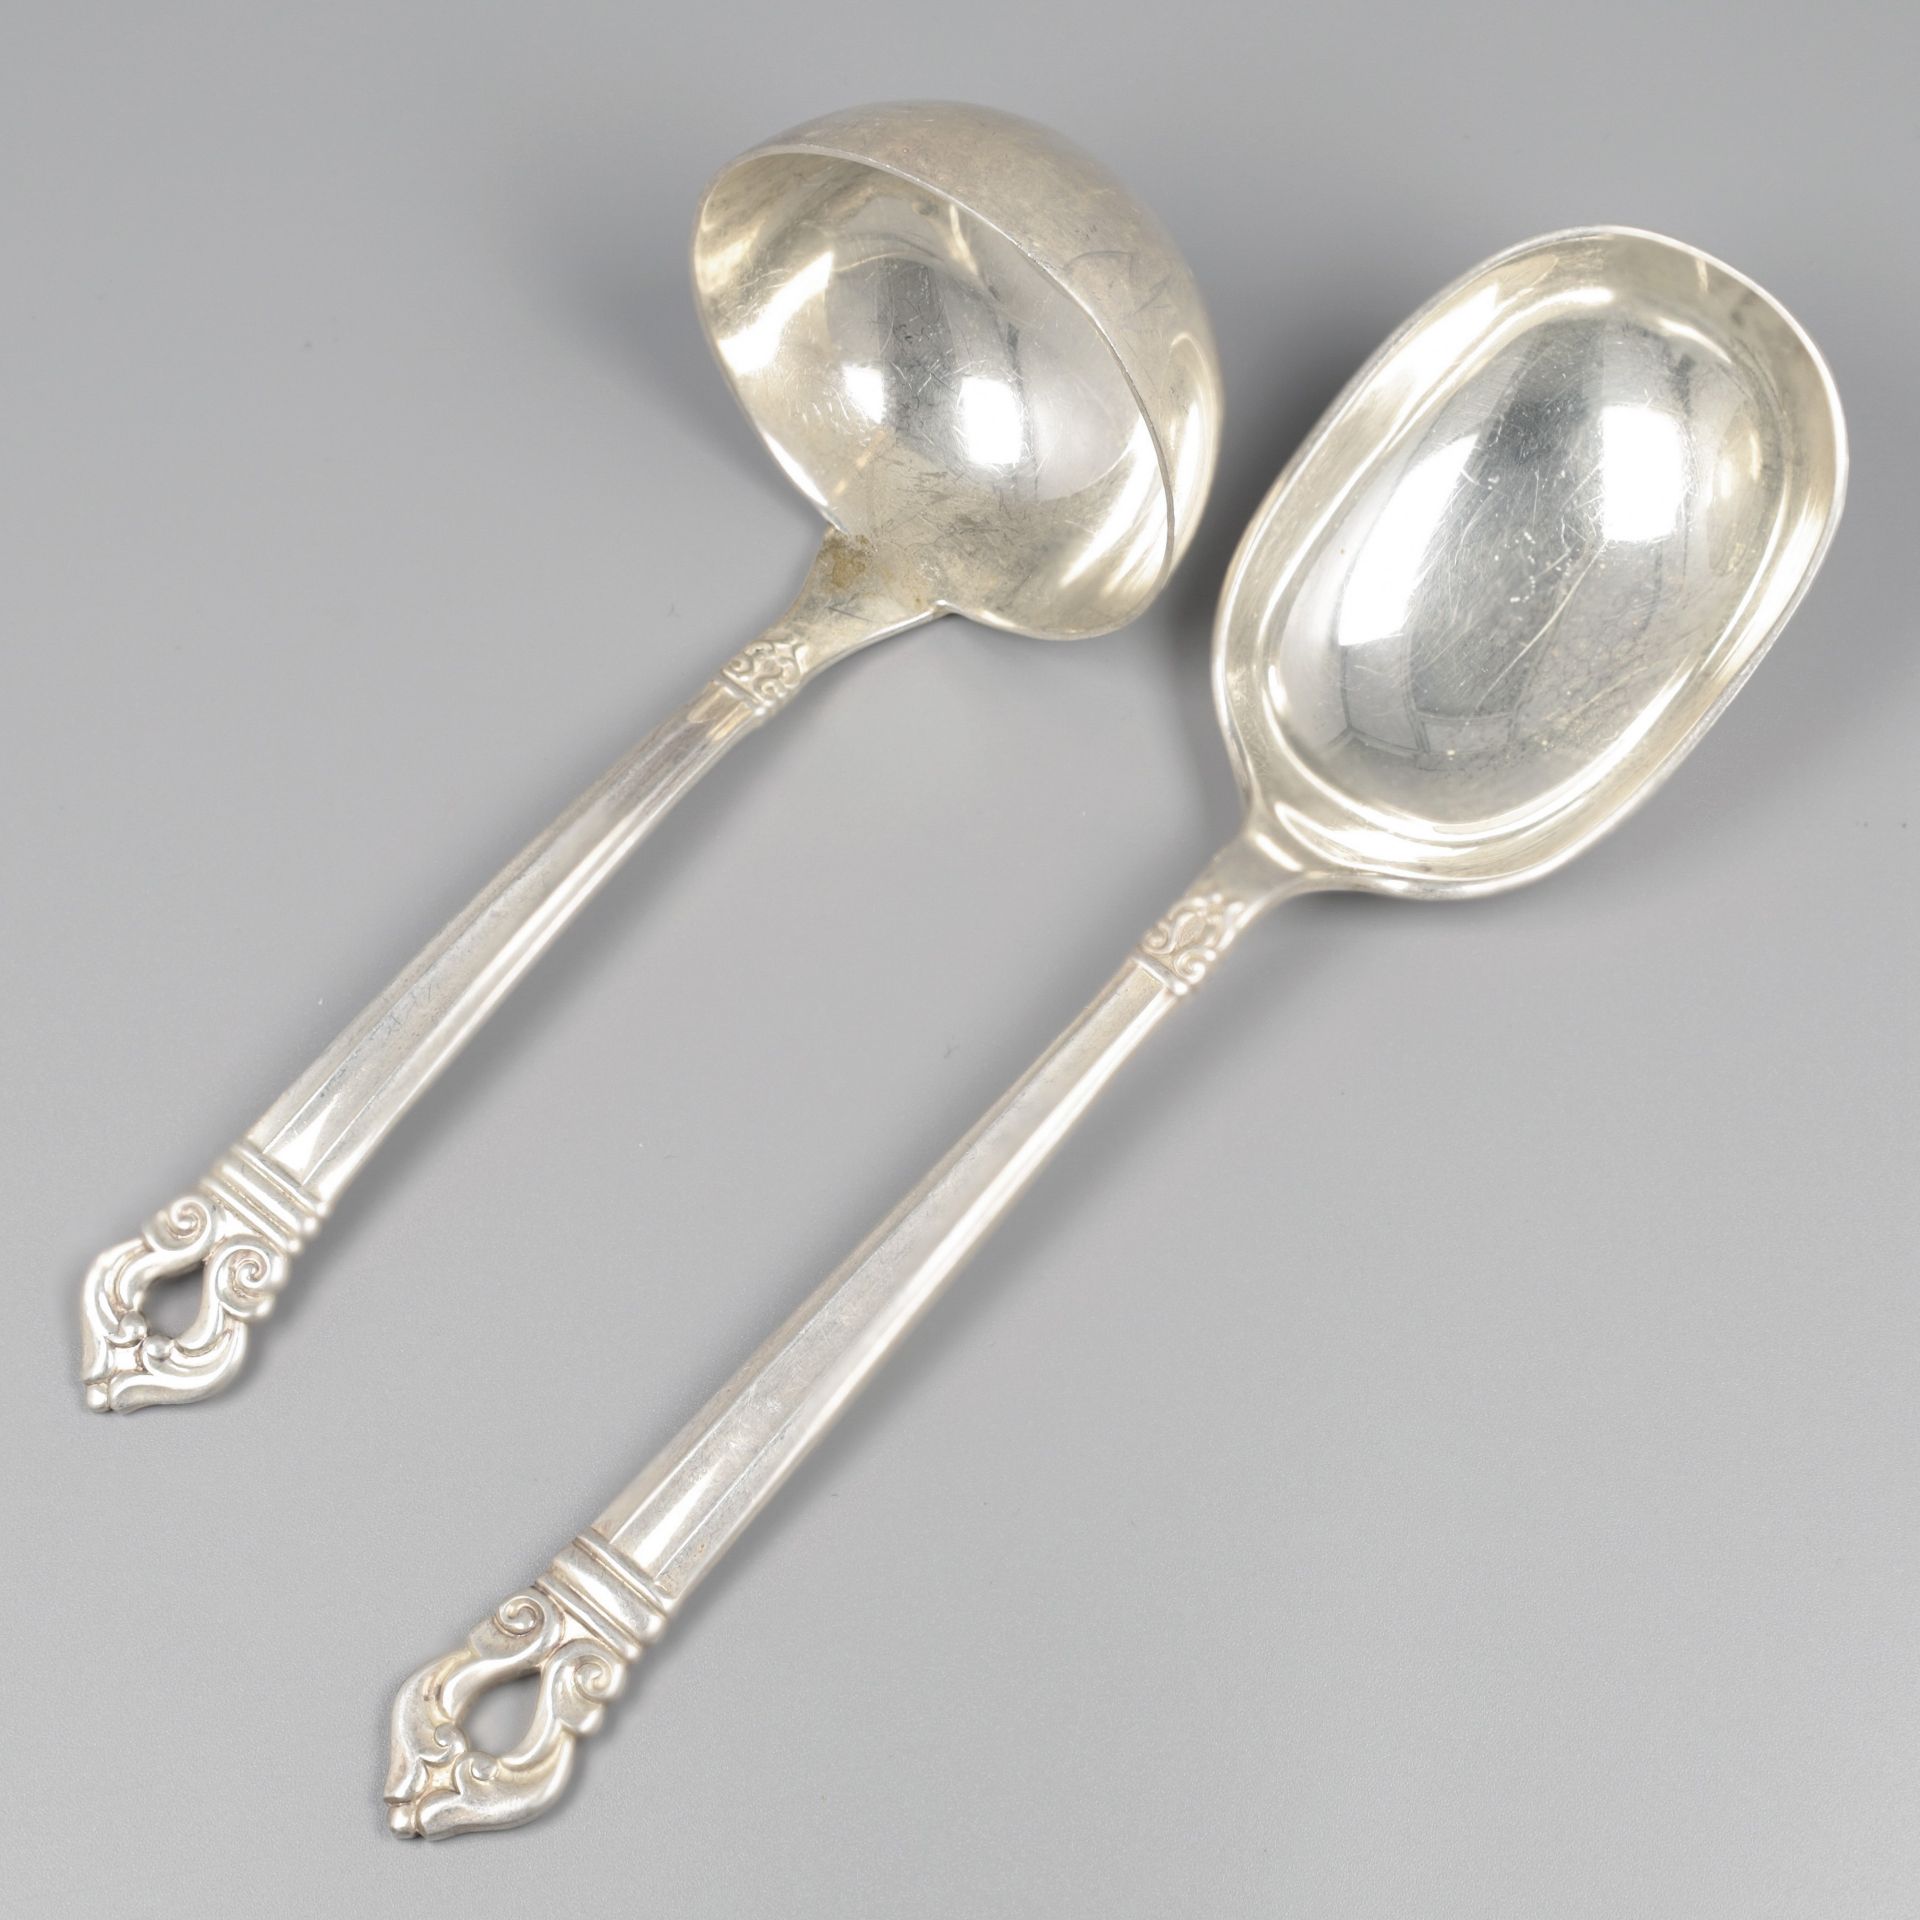 Gravy ladle and ladle, model Royal Danish at Codan S.A. (Mexico), silver.
